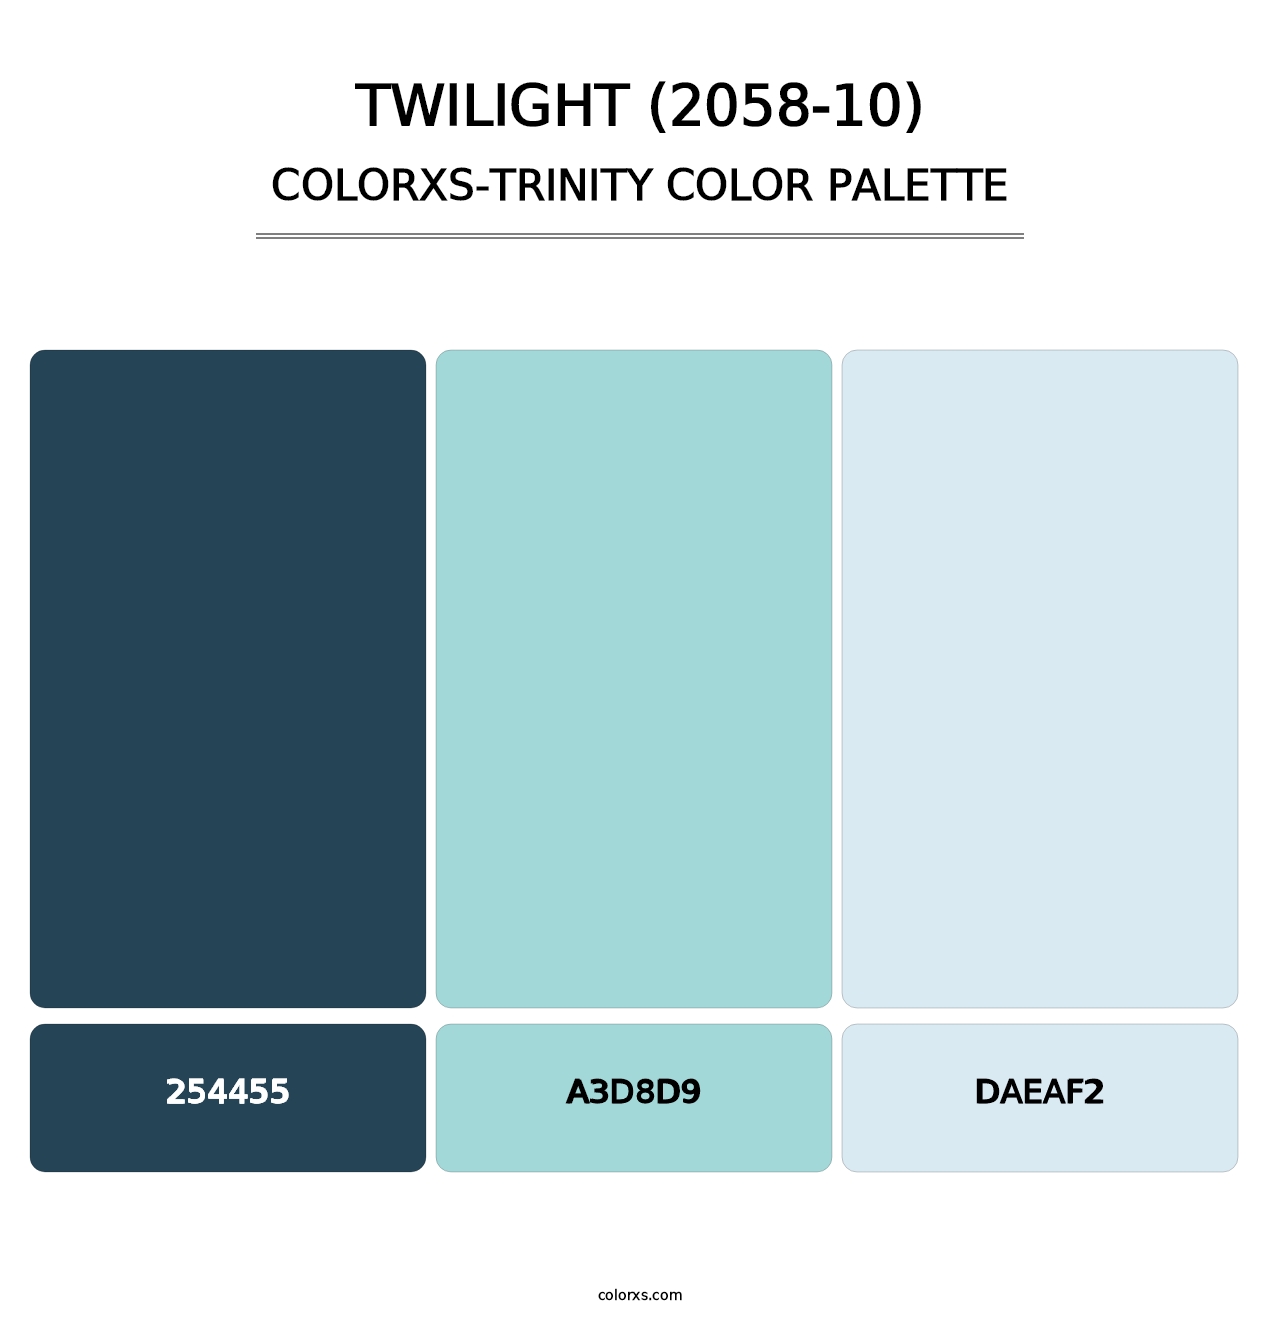 Twilight (2058-10) - Colorxs Trinity Palette